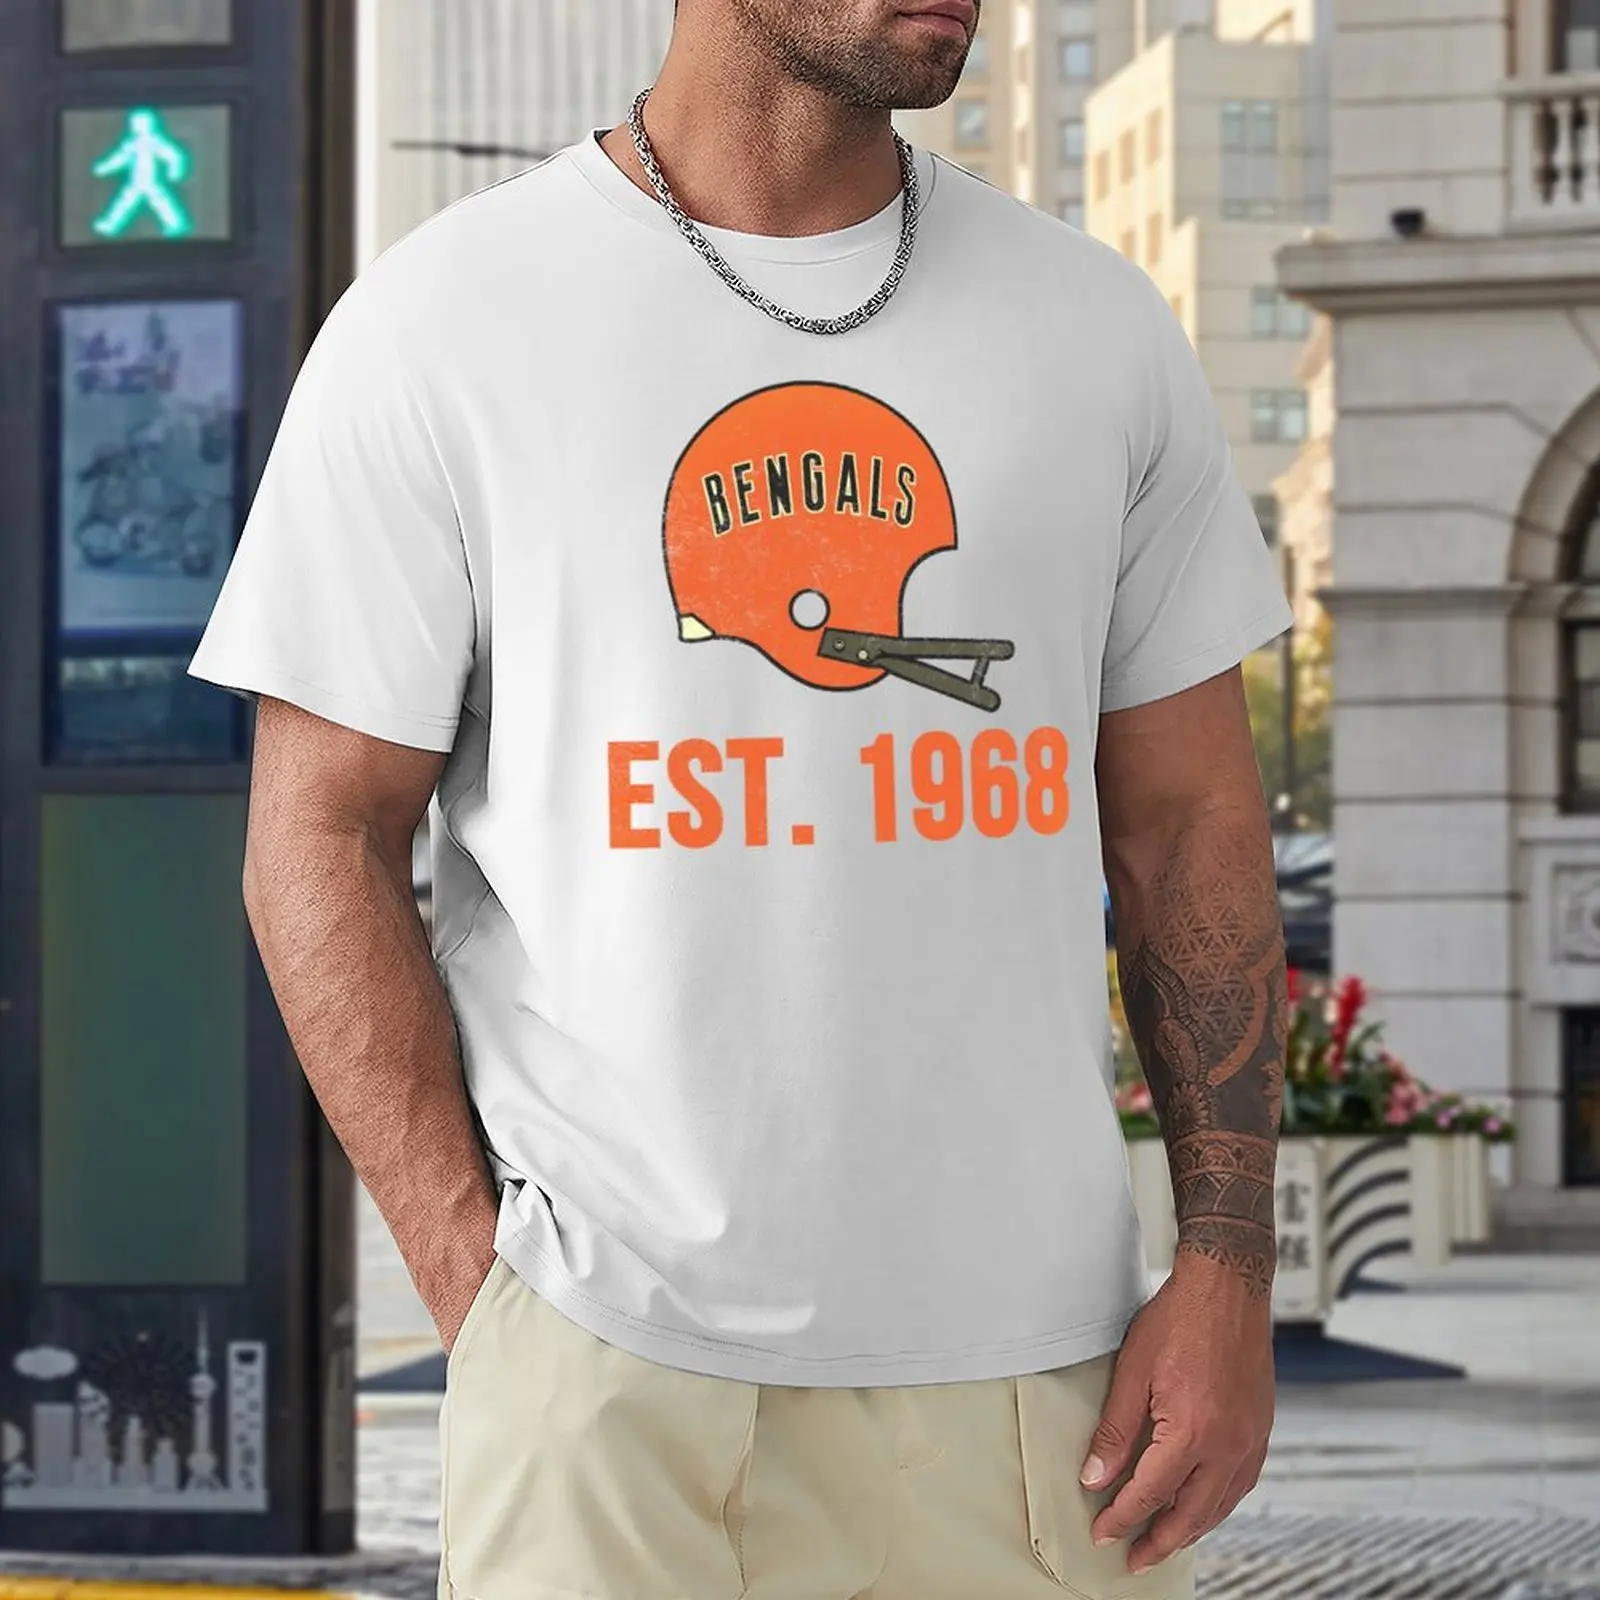 Cincinnati Bengals, Bengals est. 1968 T-Shirt tops anime clothes sublime t  shirt heavy weight t shirts for men